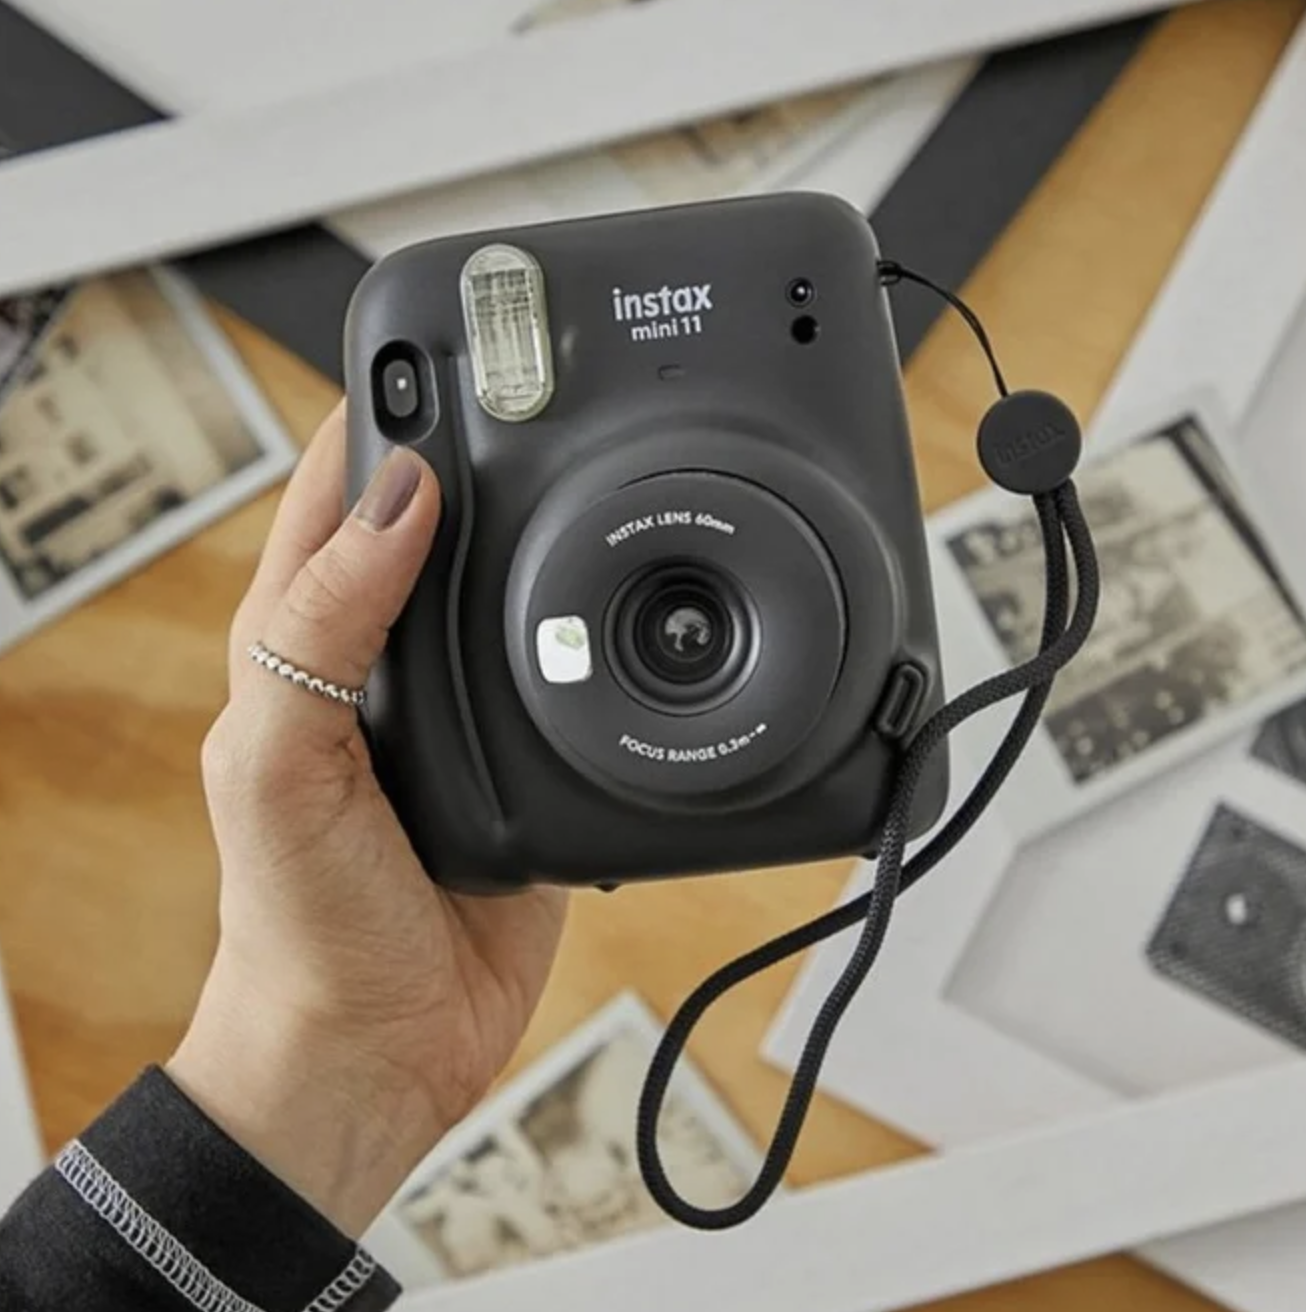 Фотоаппарат Fujifilm Instax Mini 11 купить в Москве